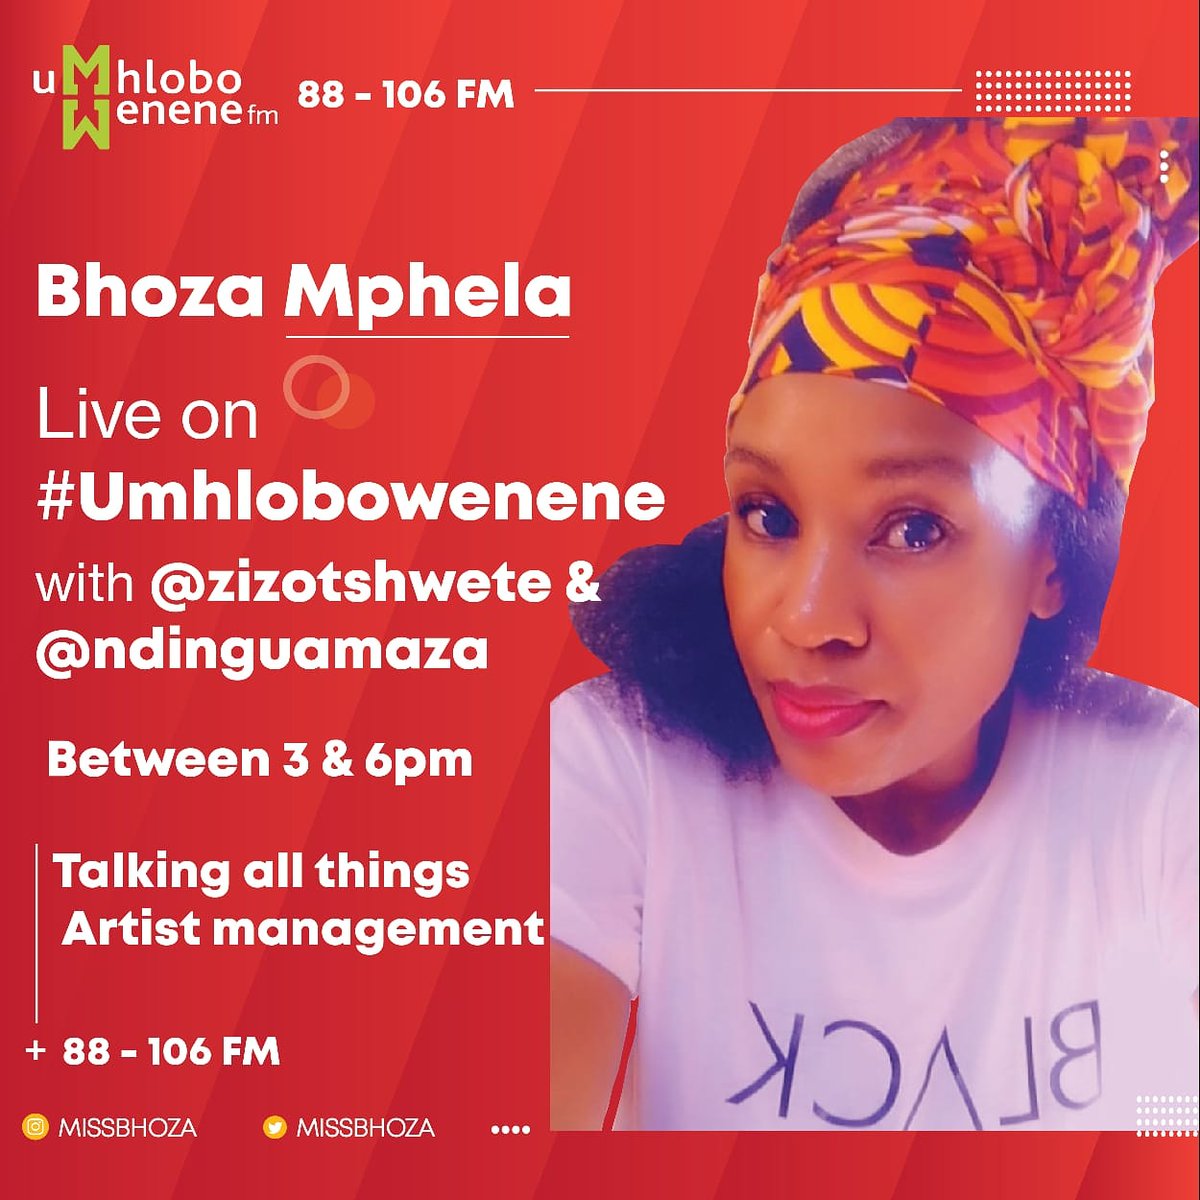 So today I will be hanging out with Zizo Tshwete & @NdinguAmaza from 3 - 6pm on #umhlobowenene FM 
Do join us neh 😘

#RiseLimpopo
#BhozaMphela